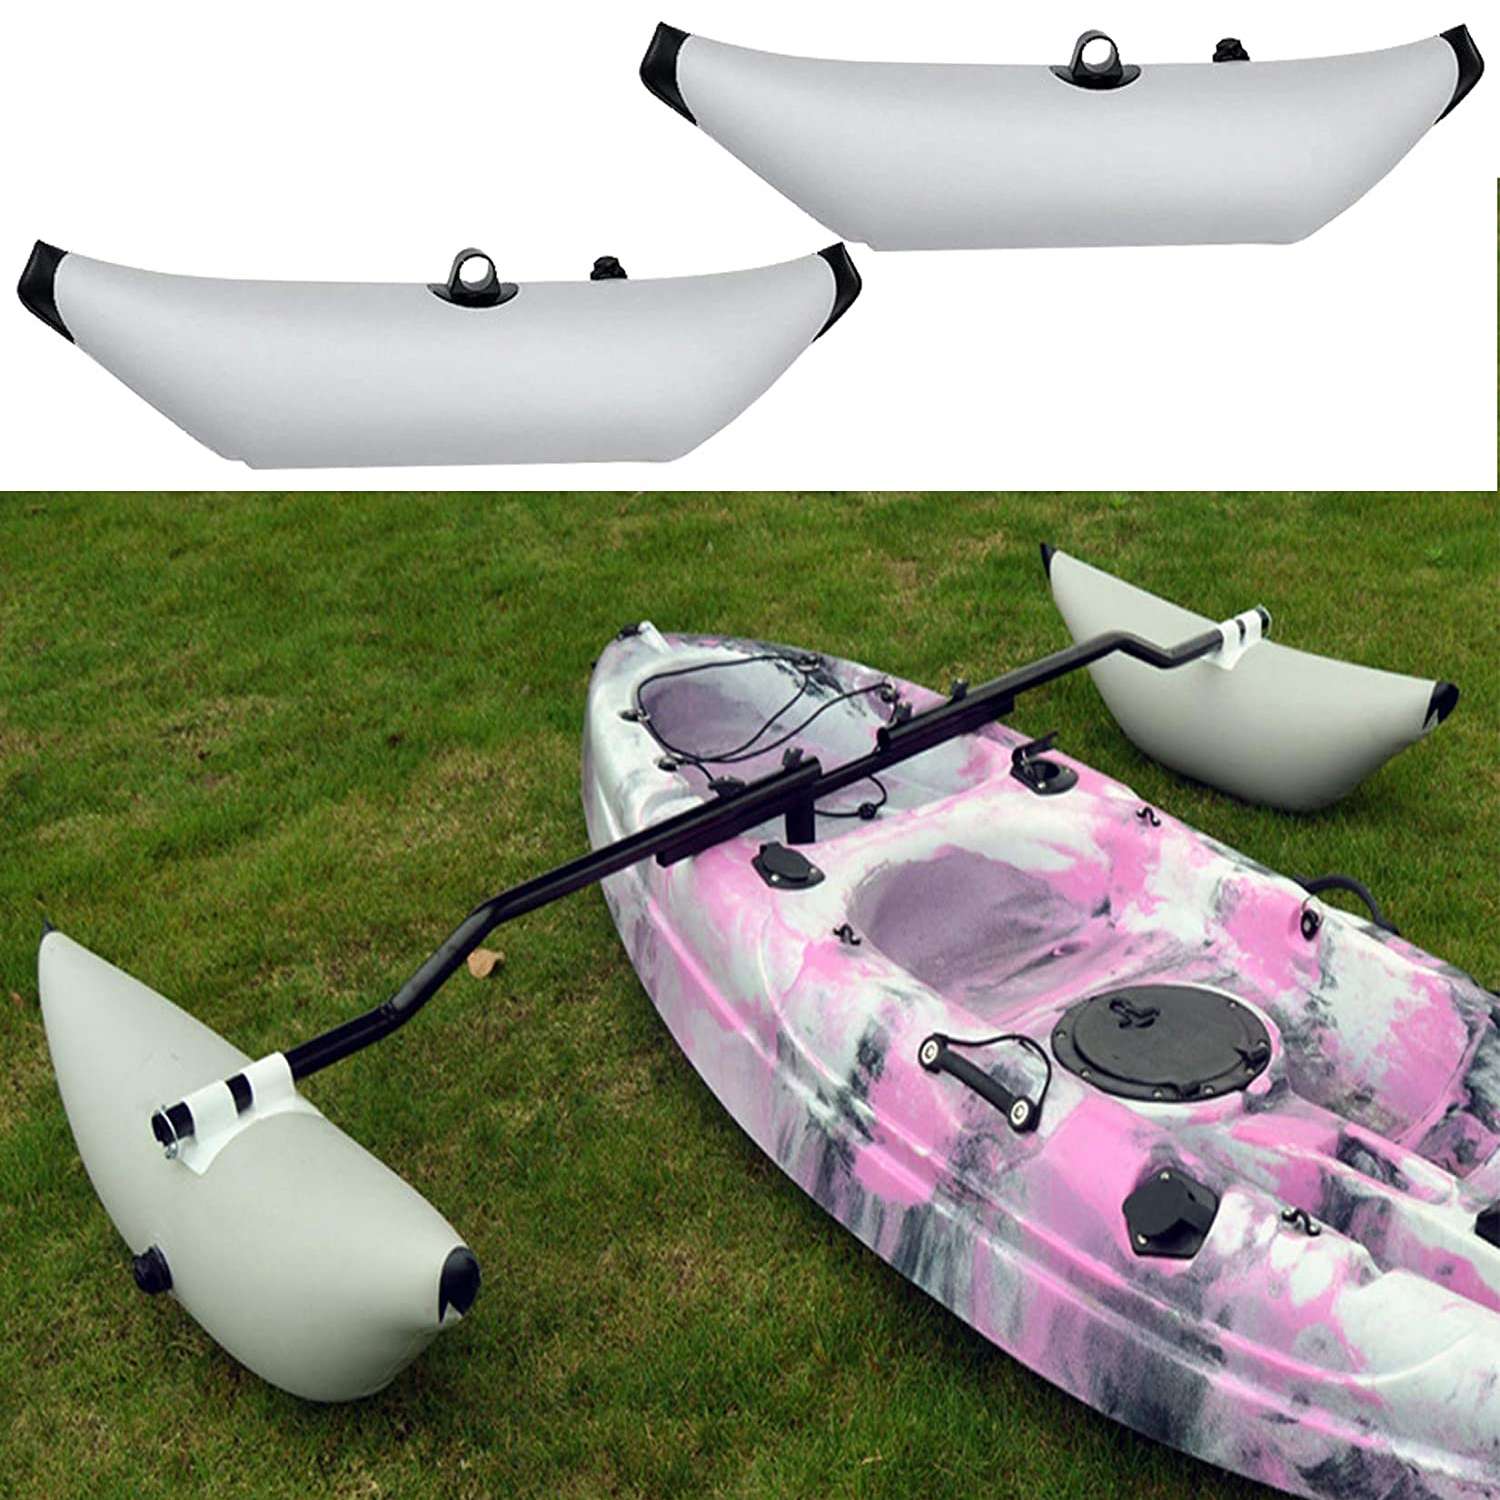 https://www.adelaidecanoeworks.com.au/4045/inflatable-outrigger-kit-surge-kayaks.jpg